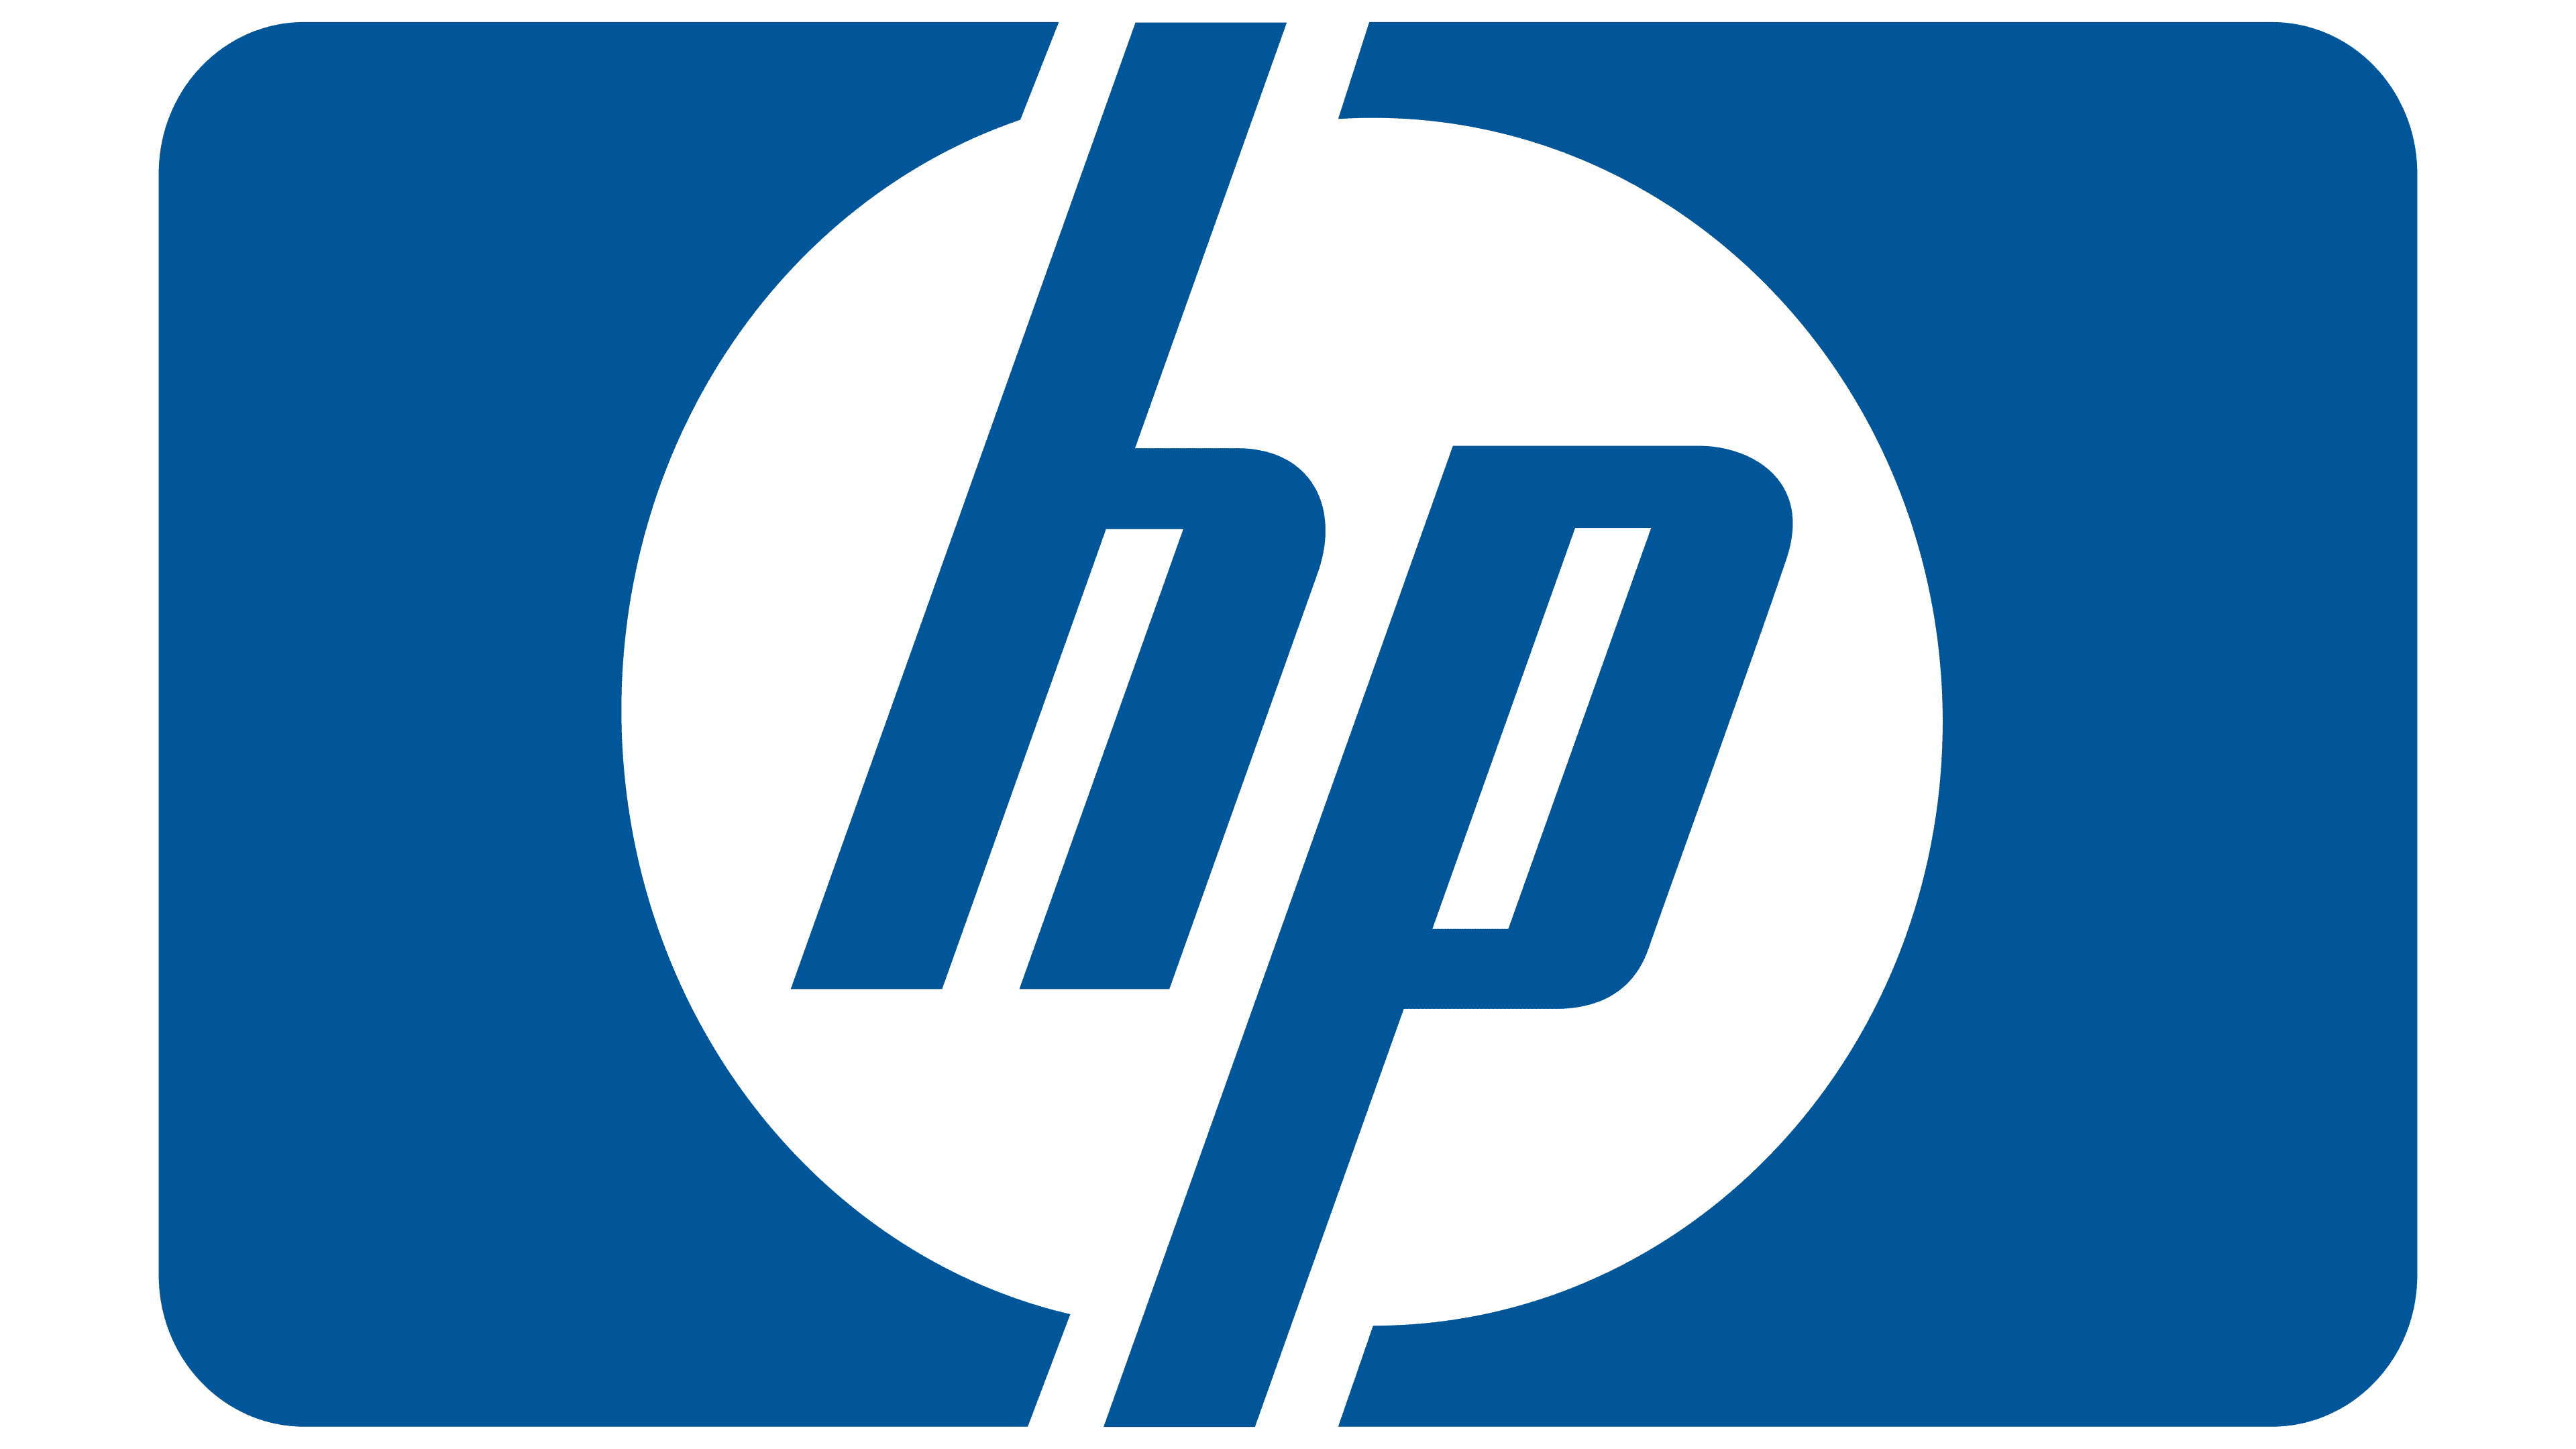 HP Logo Transparent